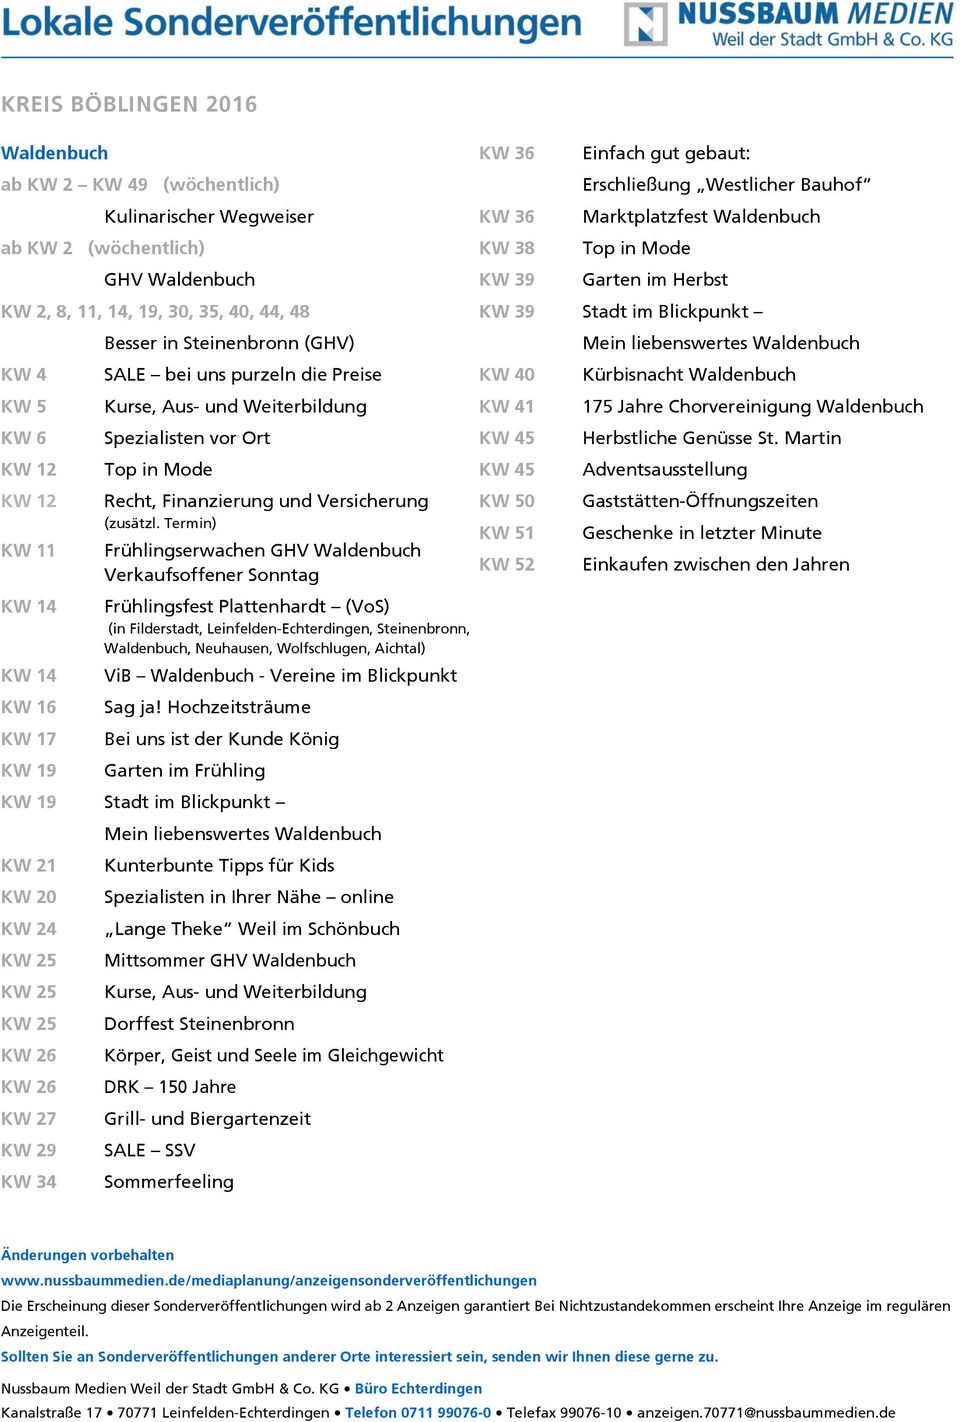 Termin) Frühlingserwachen GHV Waldenbuch Verkaufsoffener Sonntag Frühlingsfest Plattenhardt (VoS) (in Filderstadt, Leinfelden-Echterdingen, Steinenbronn, Waldenbuch, Neuhausen, Wolfschlugen, Aichtal)